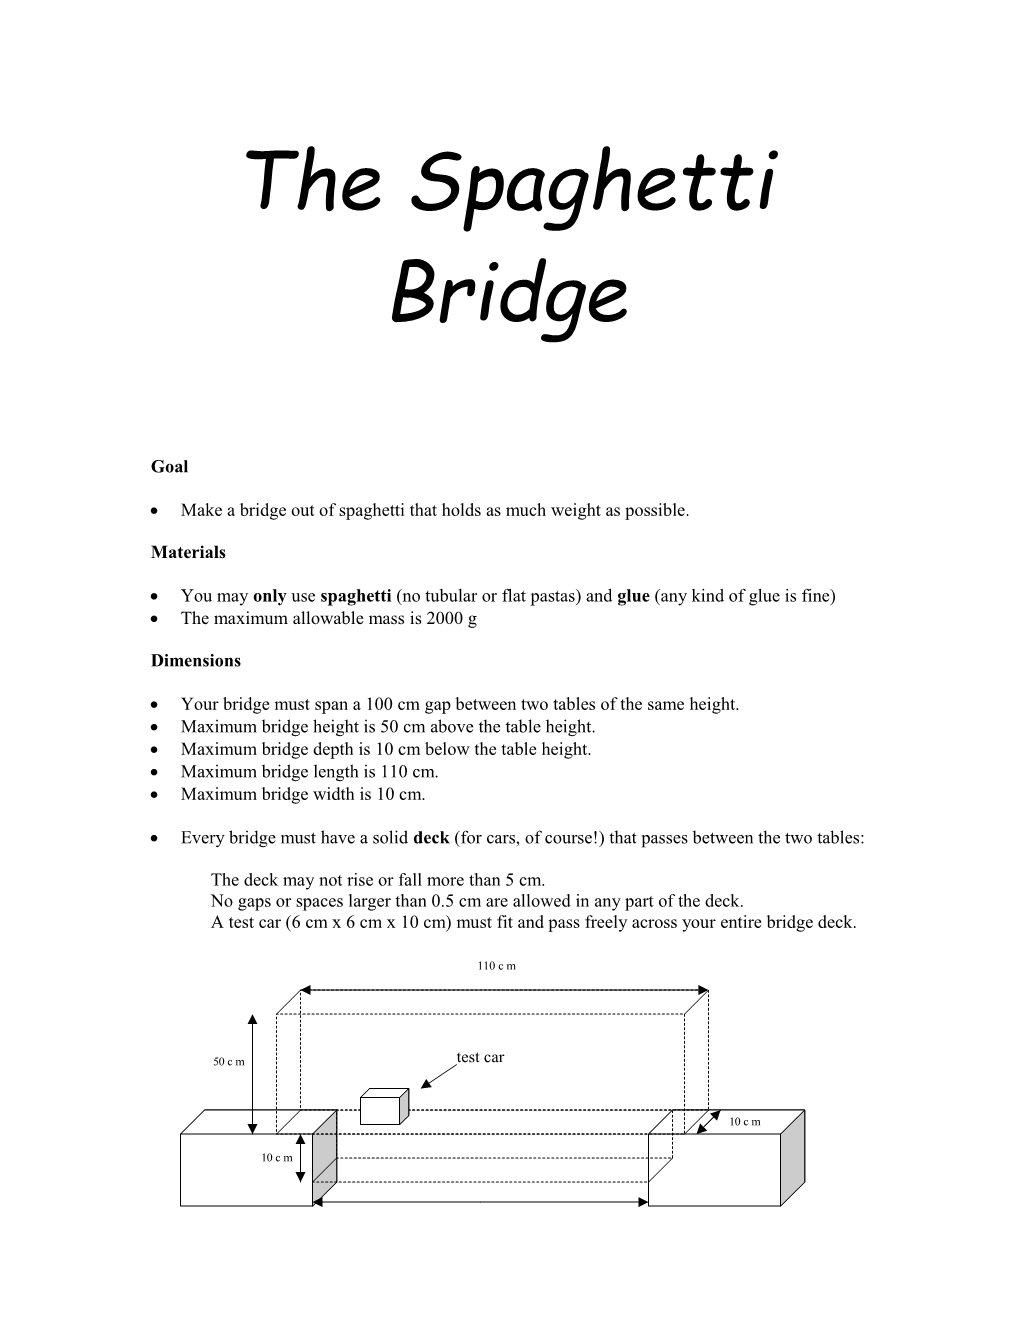 The Spaghetti Bridge